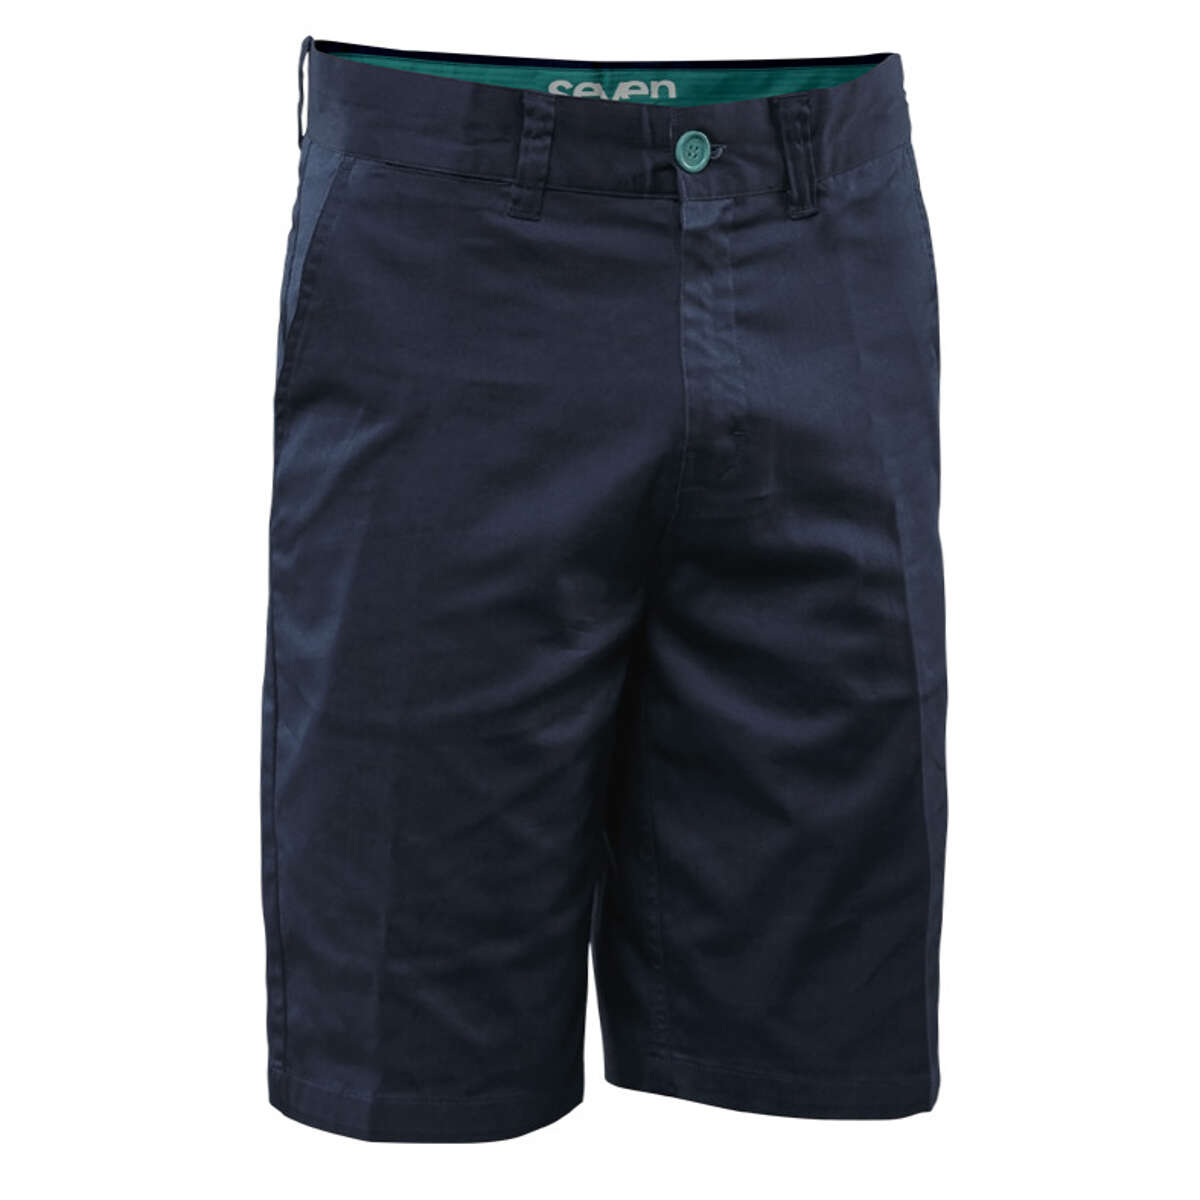 Seven MX Shorts Chino Navy